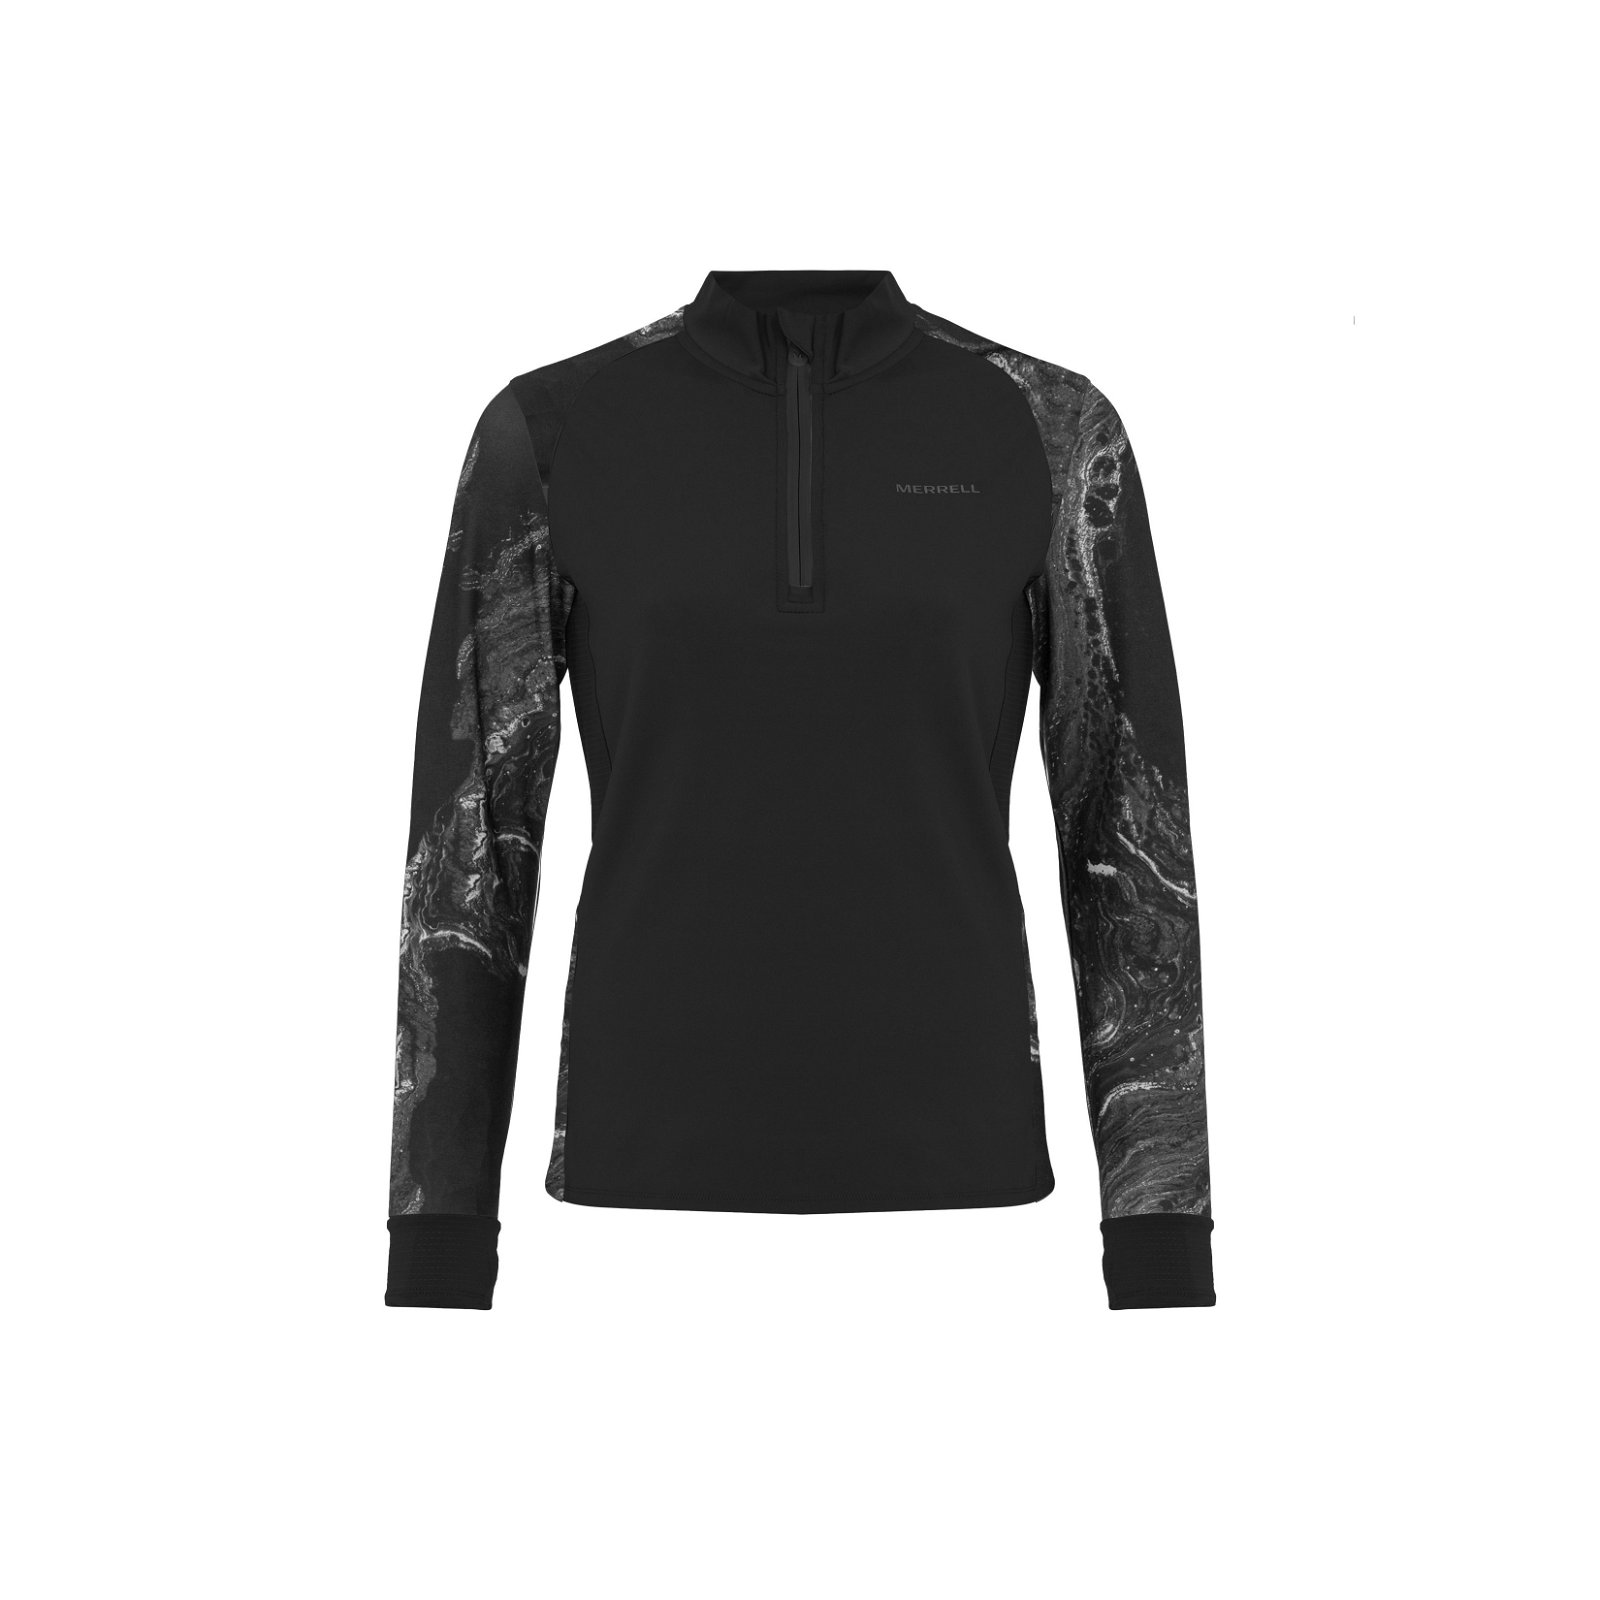 Merrell Select P Kadın Sweatshirt - Siyah - 1